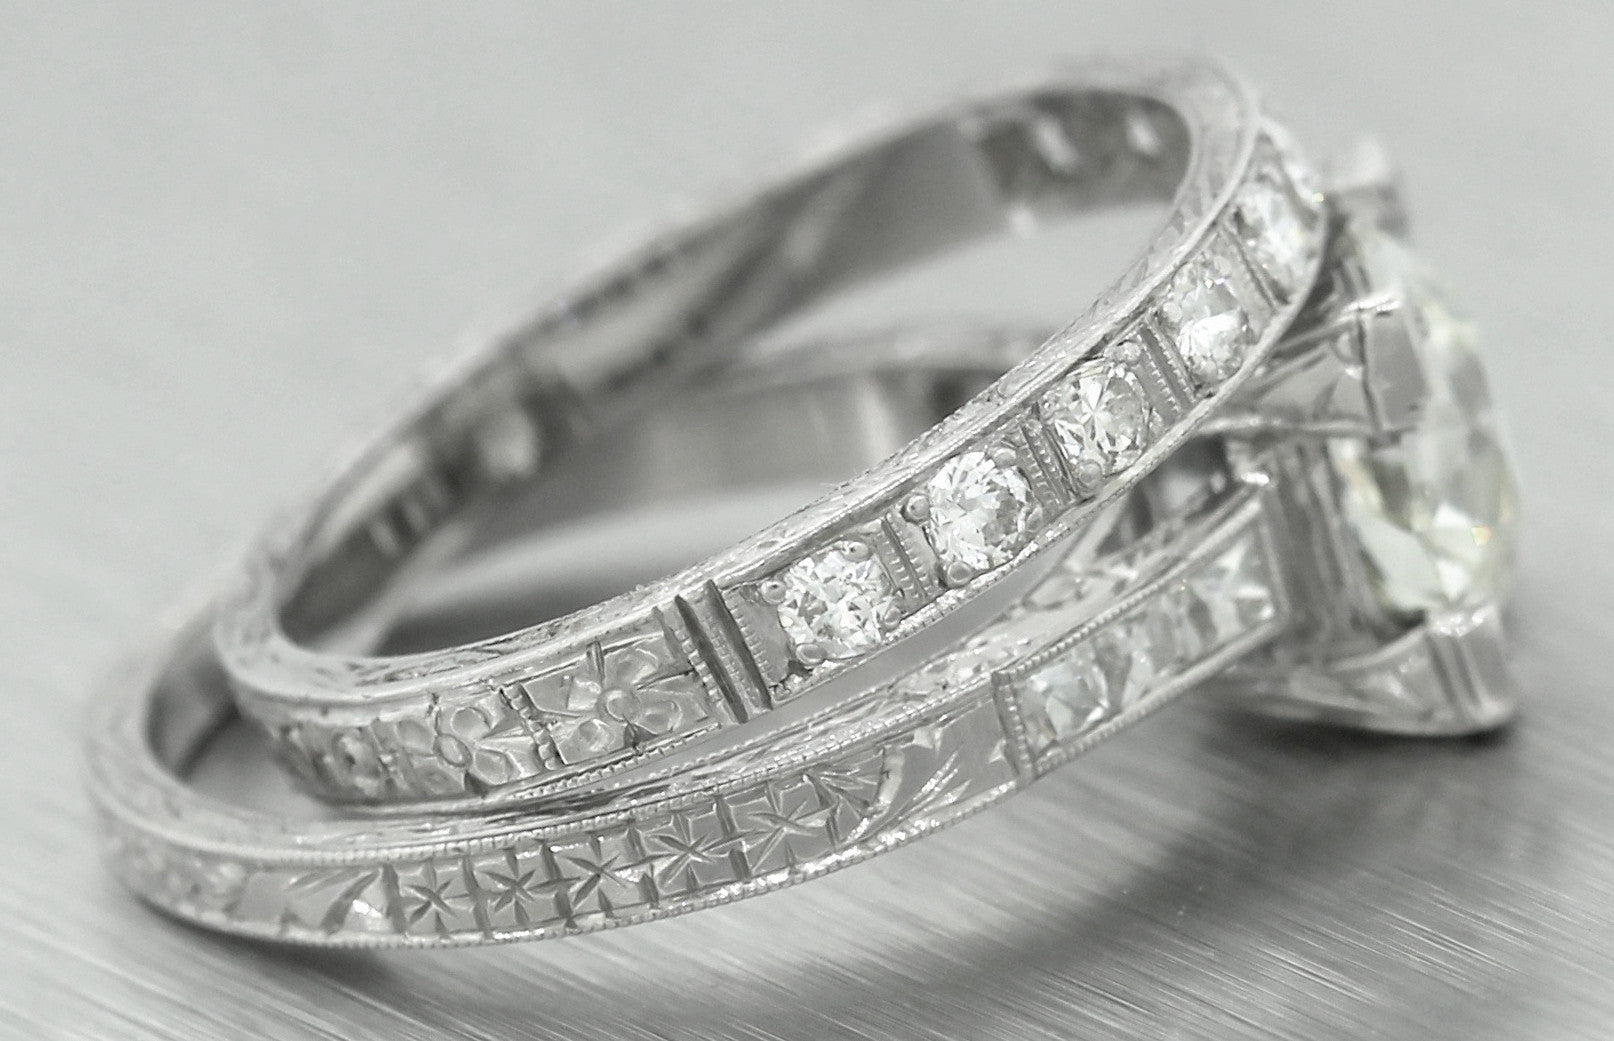 Ladies Antique Art Deco Platinum 3.00ctw Diamond Stackable Engagement Ring Set